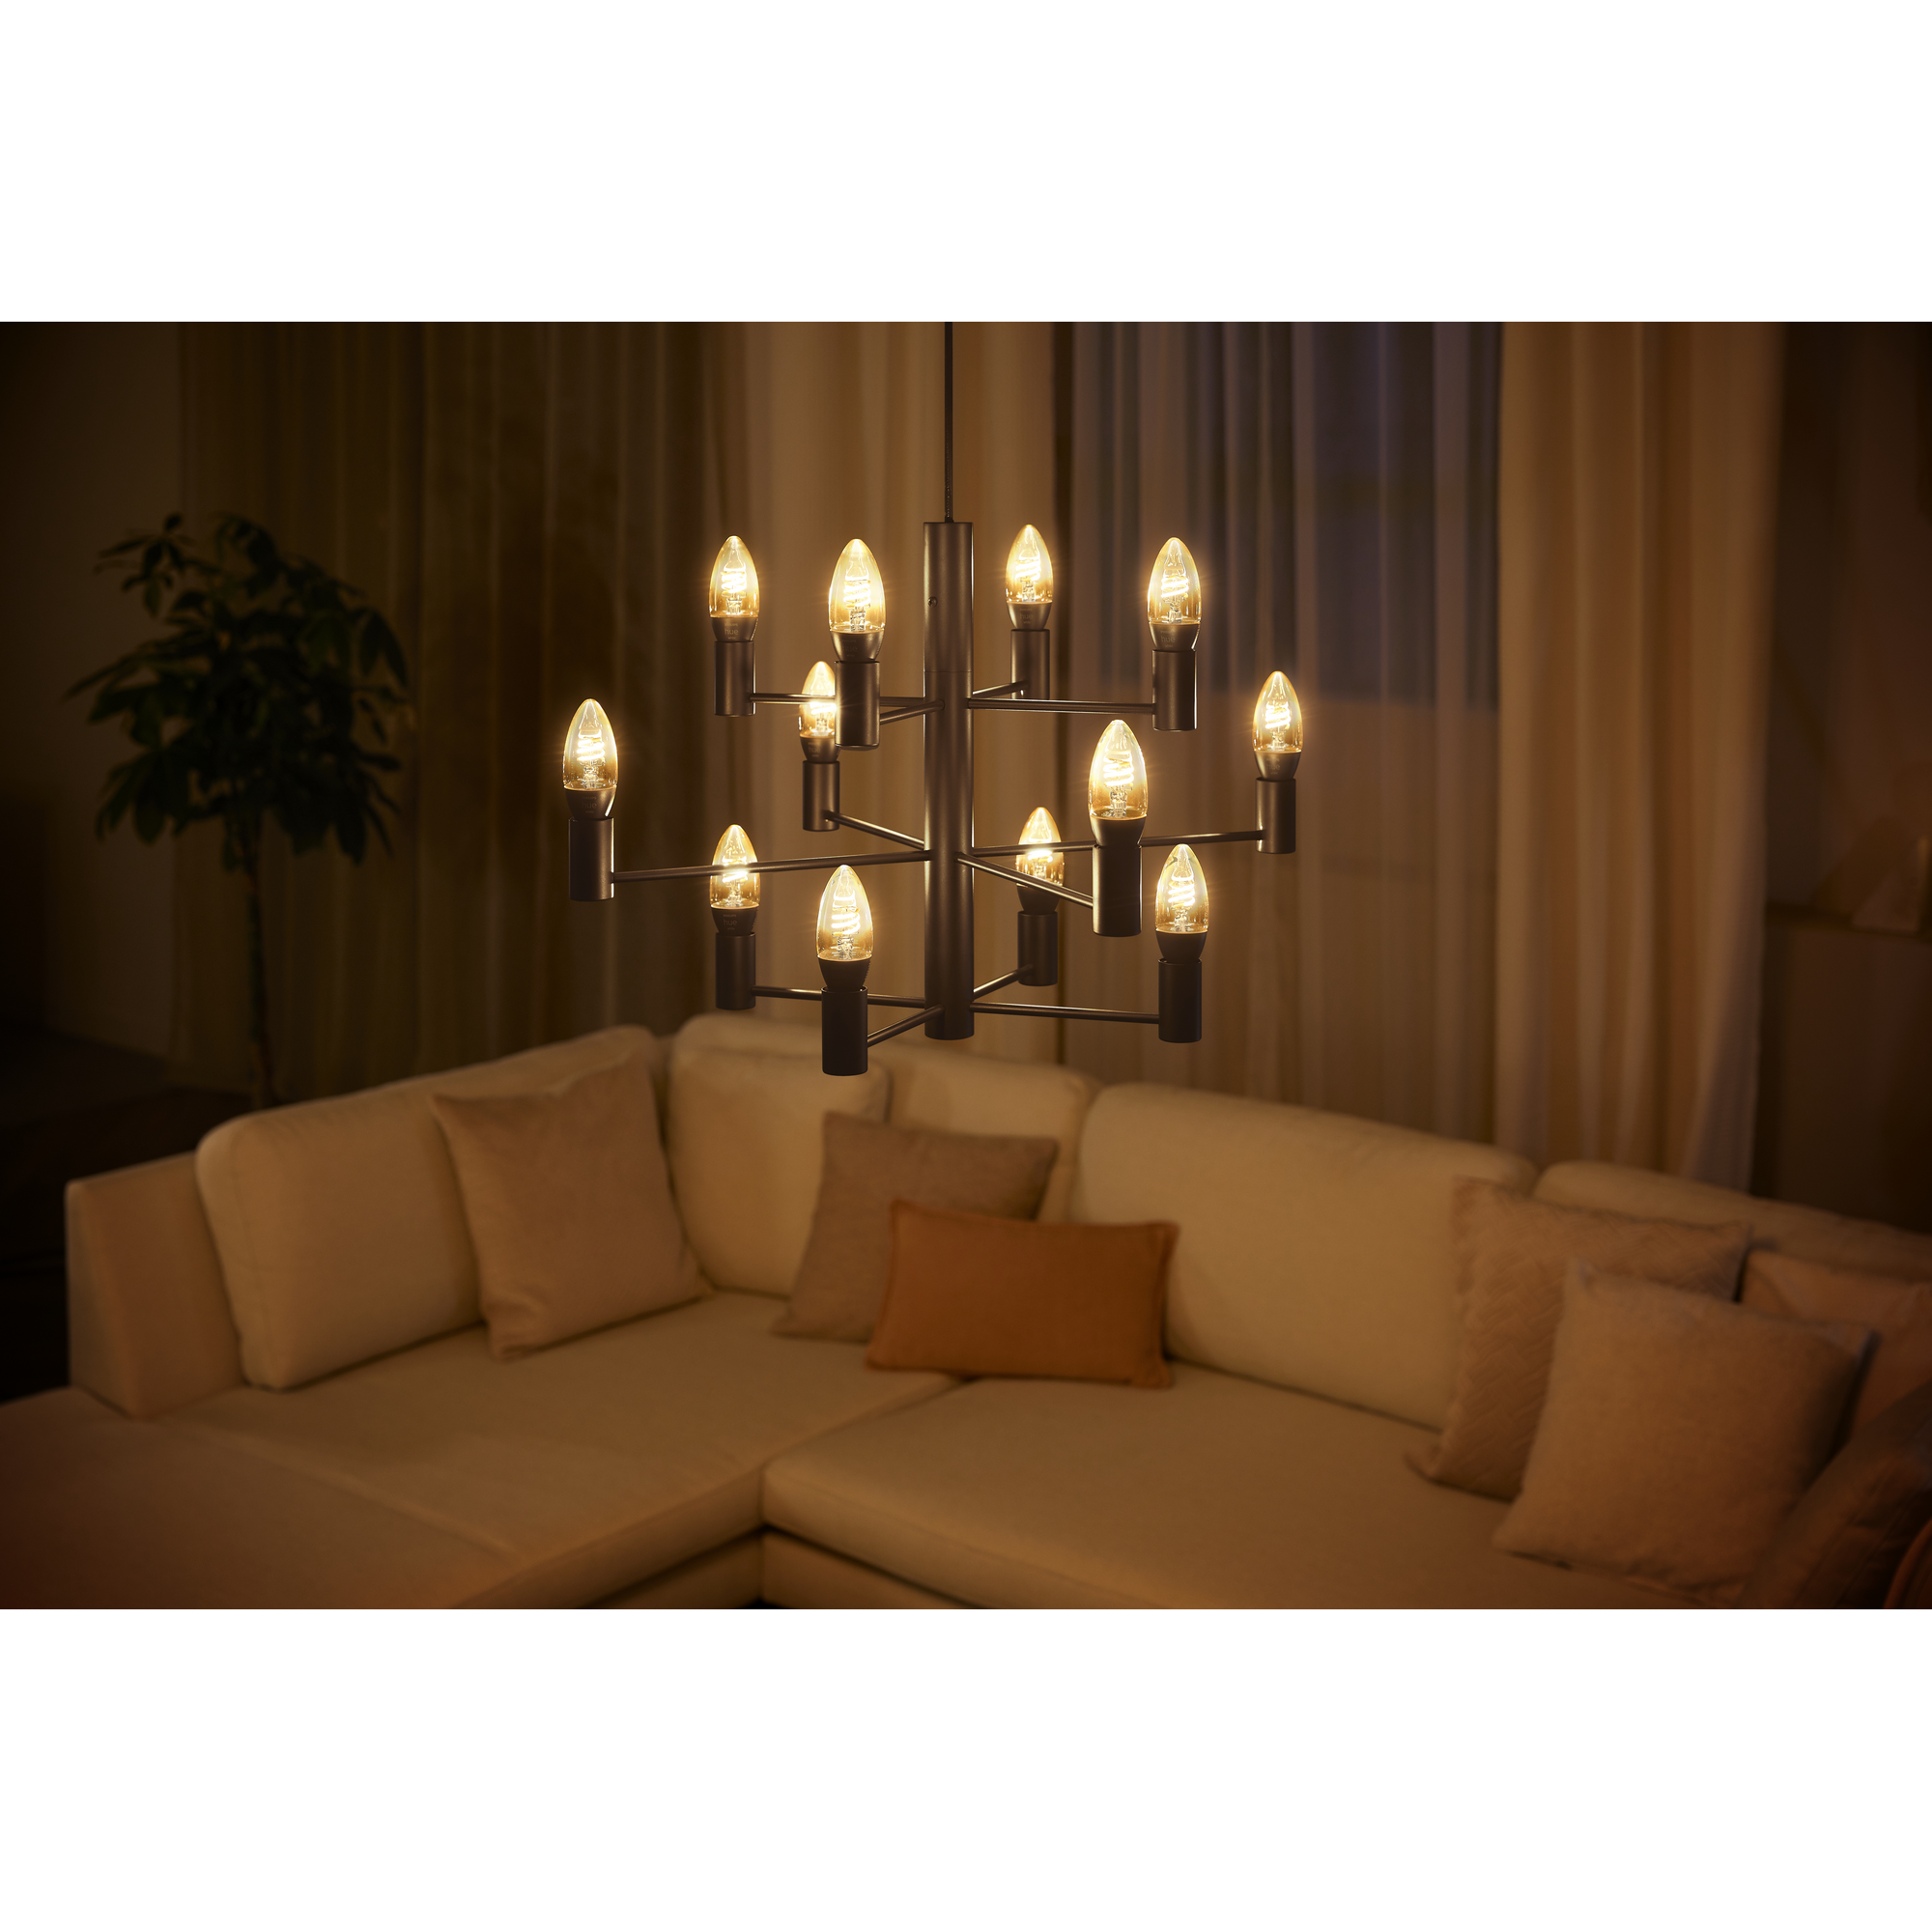 LED-Filamentlampe 'Hue White' E14 4,5 W + product picture